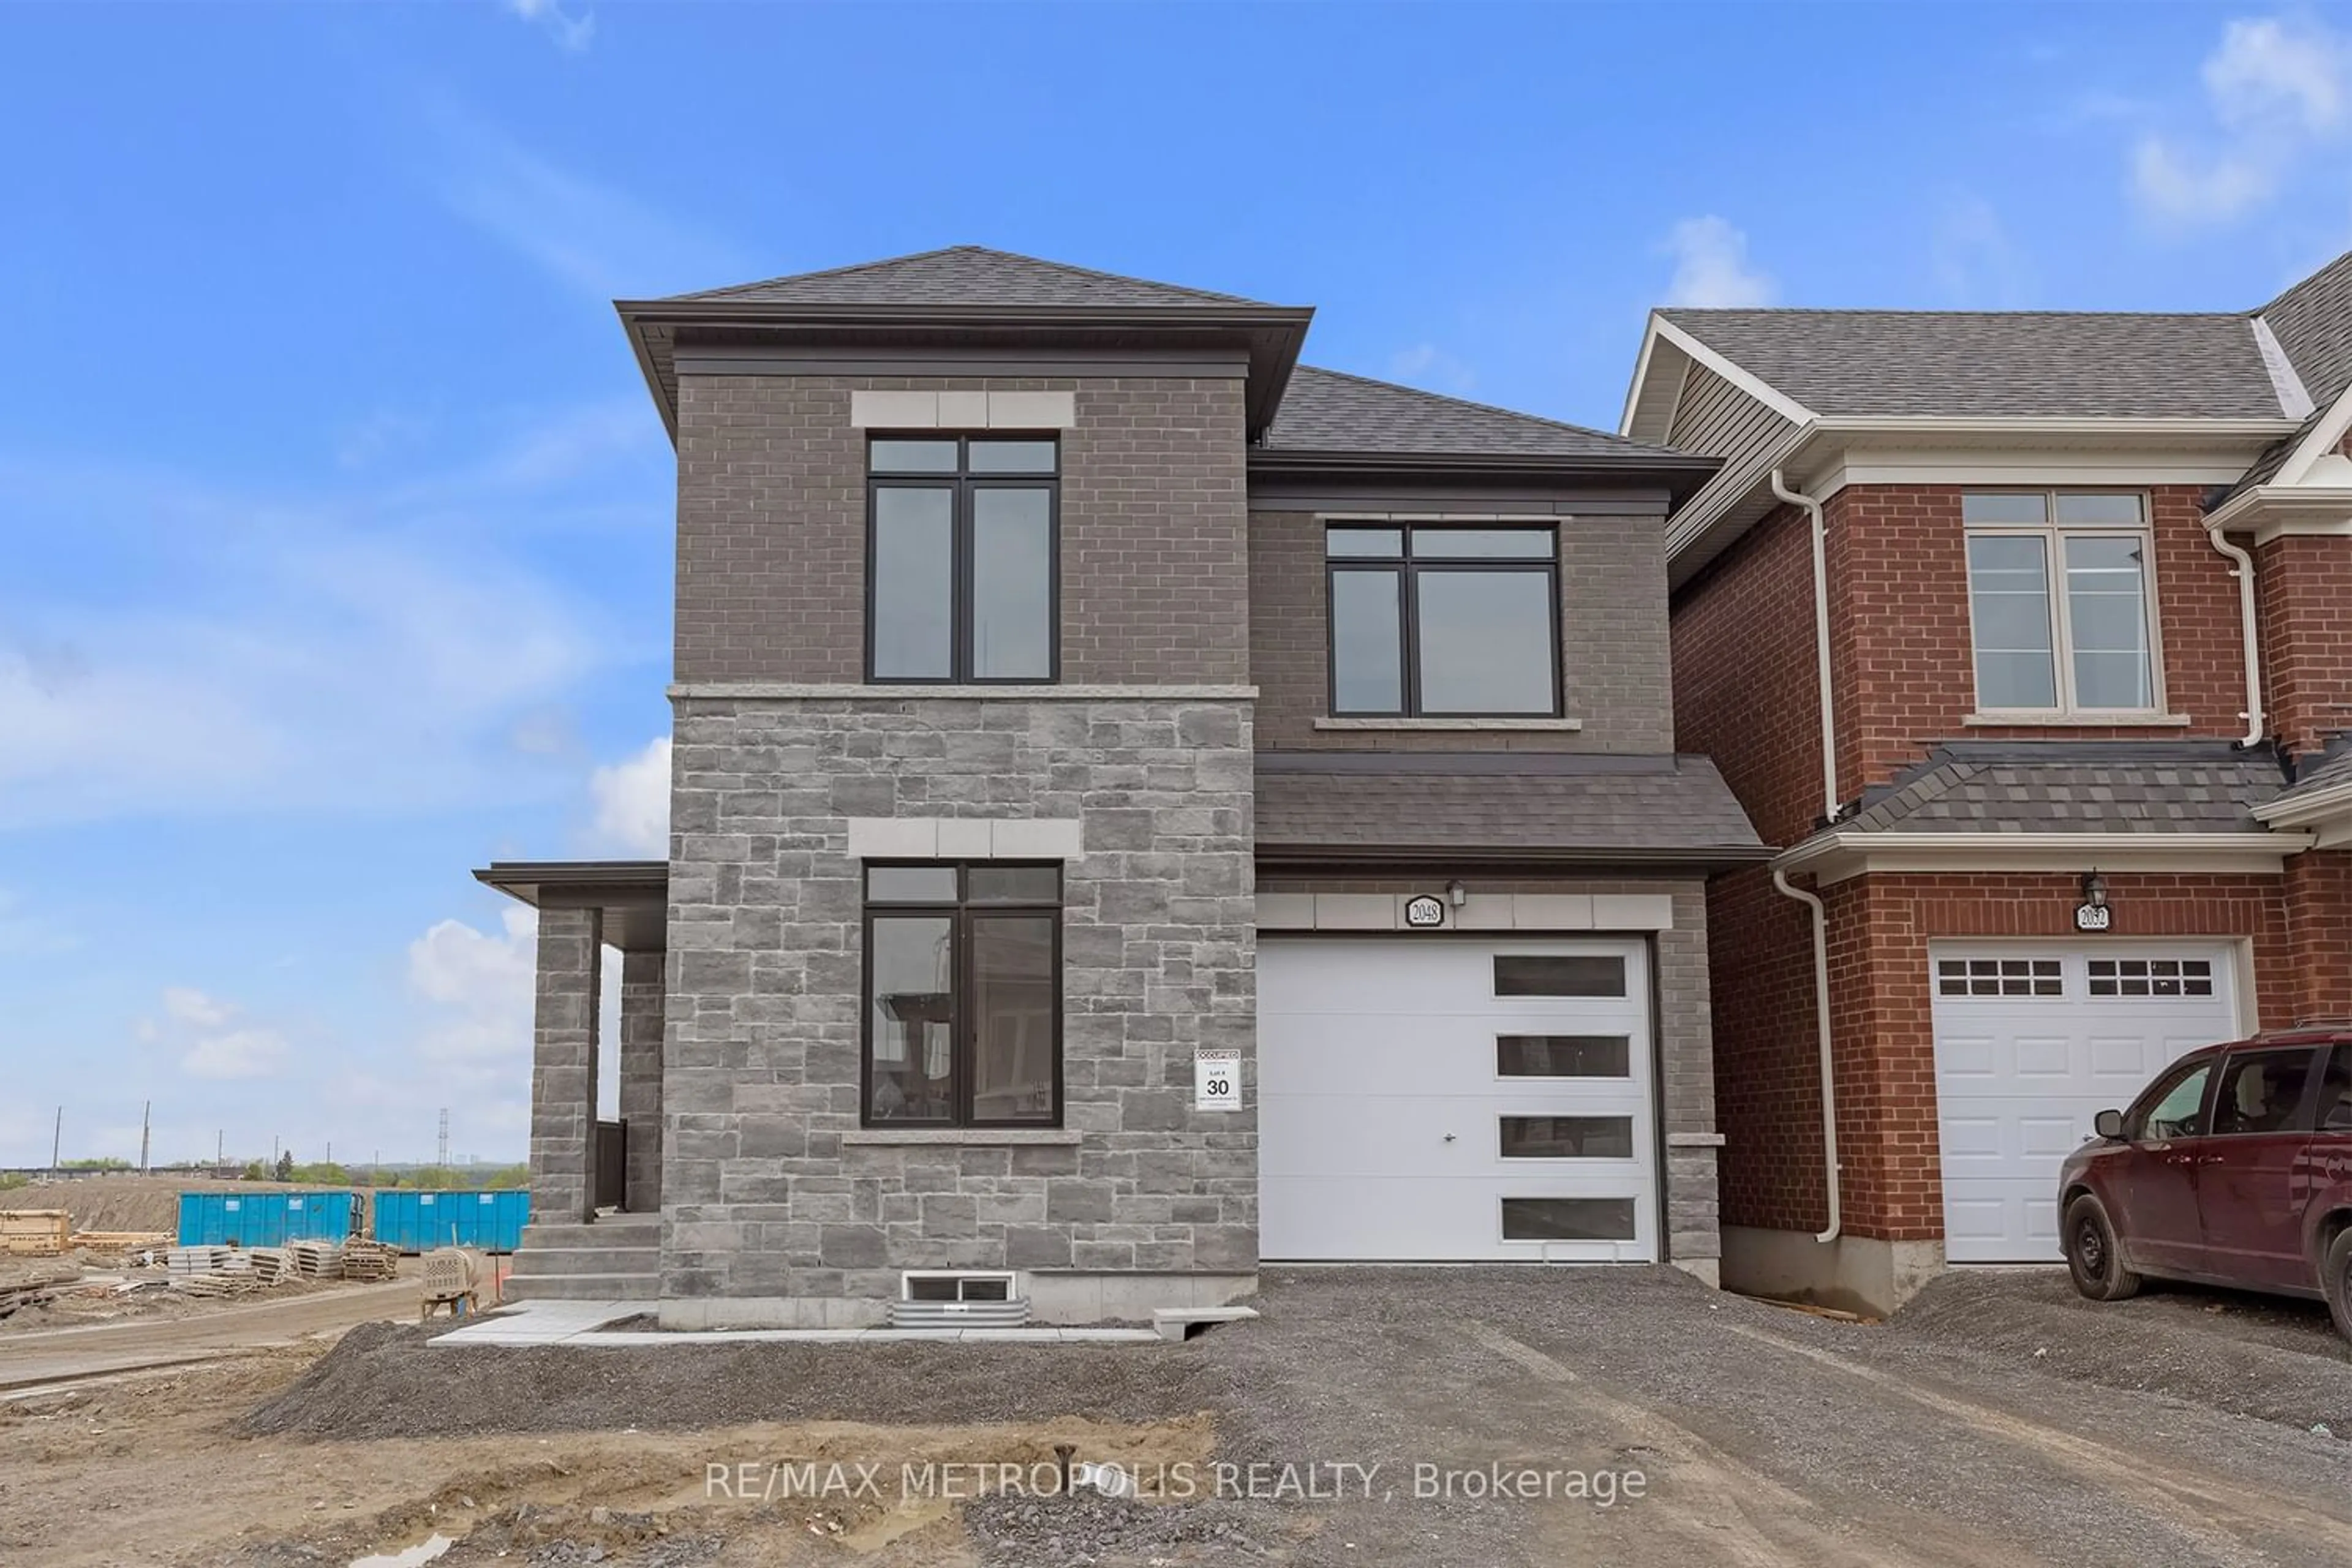 Home with brick exterior material for 2048 Chris Mason St, Oshawa Ontario L1H 7K5